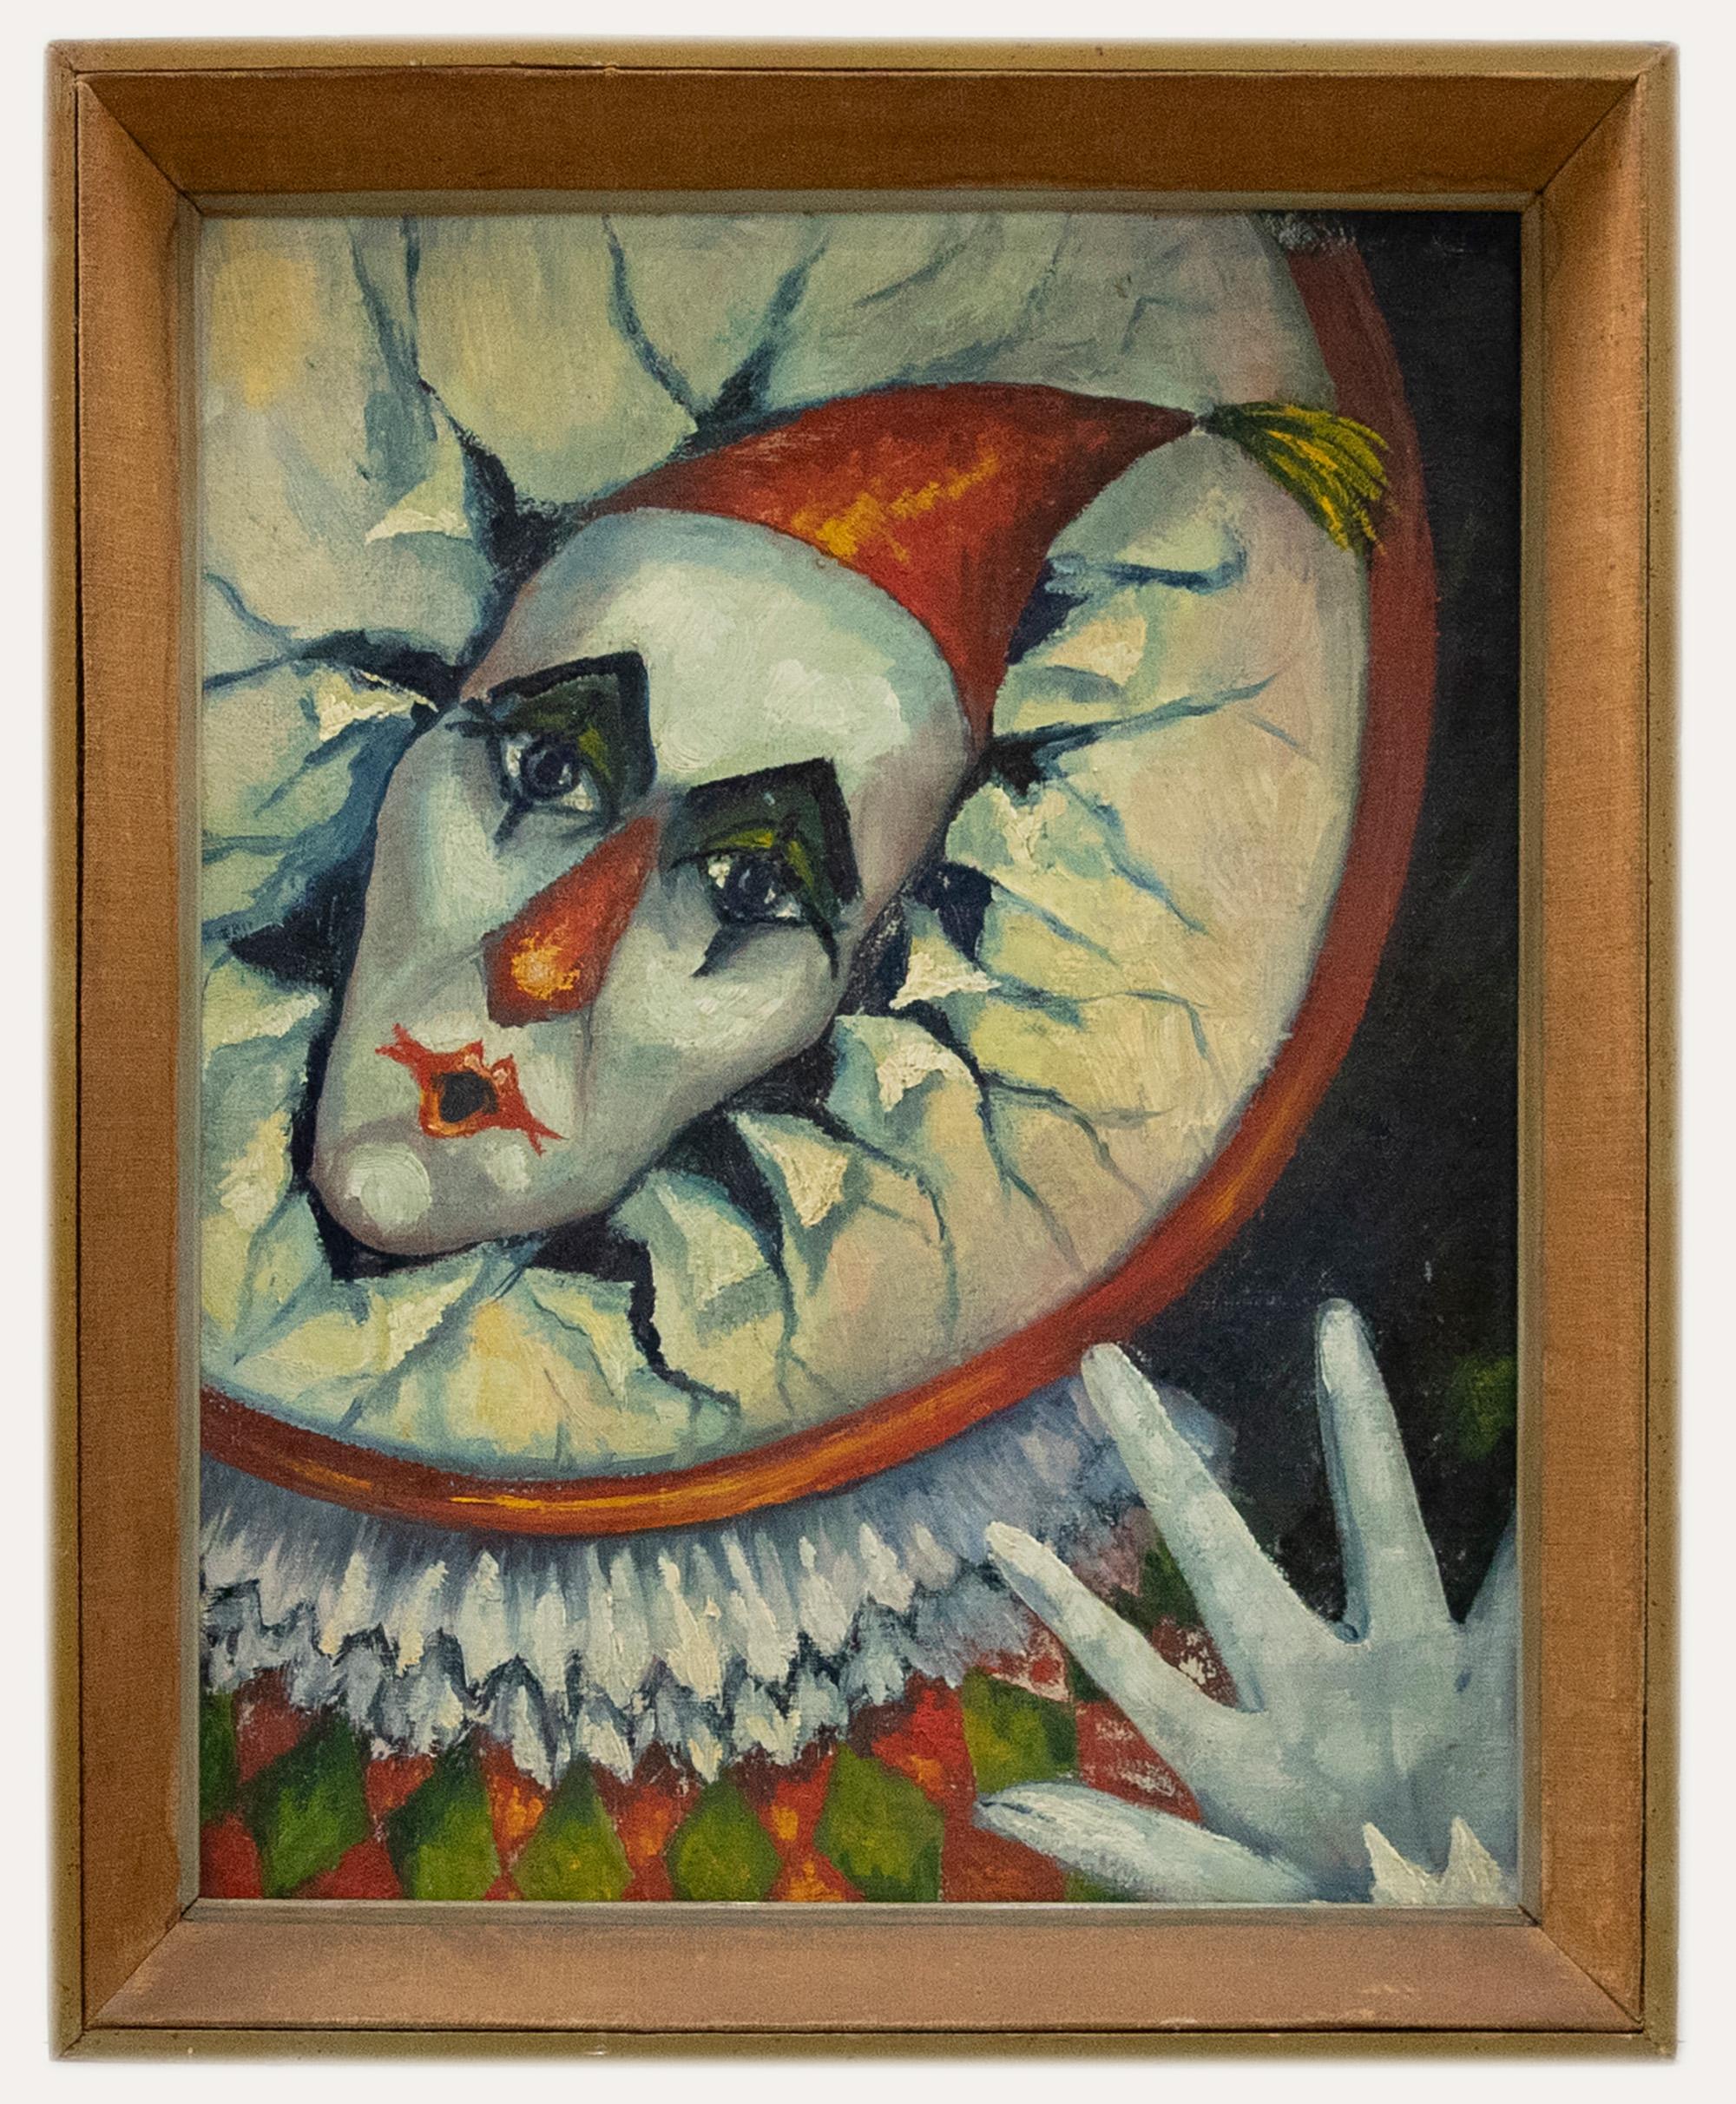 Figurative Painting Unknown - Huile du 20e siècle - The Clown